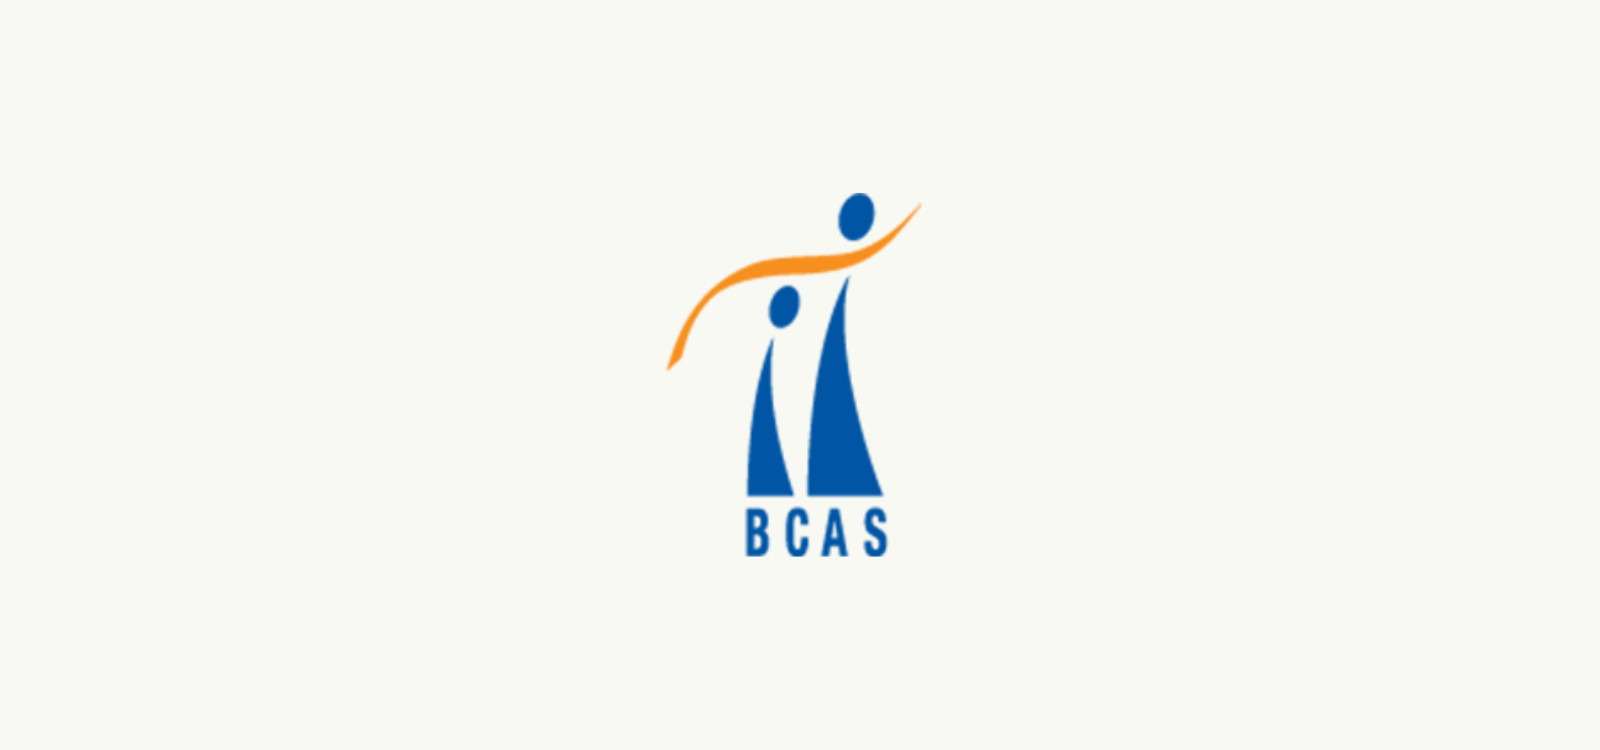 Projet Actions sociales - BCAS - Fondation Minkoff